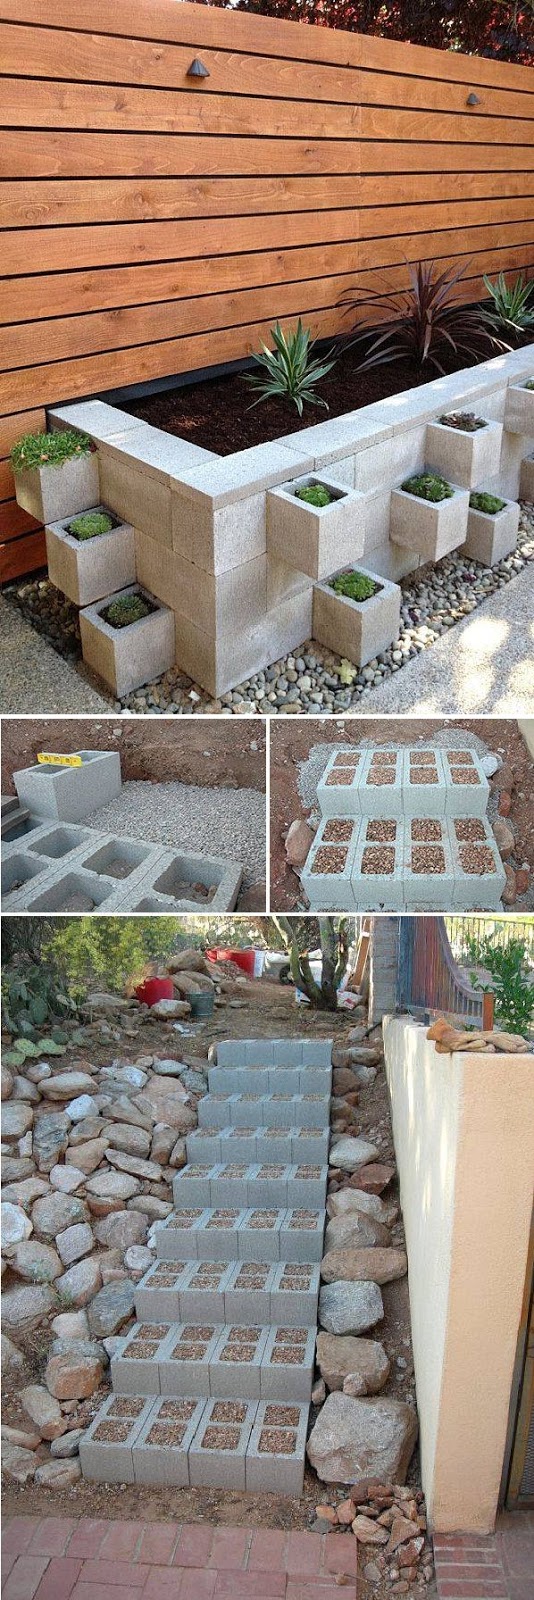 DIY Projects Using Cinder Blocks Are Brilliant - garden favorite